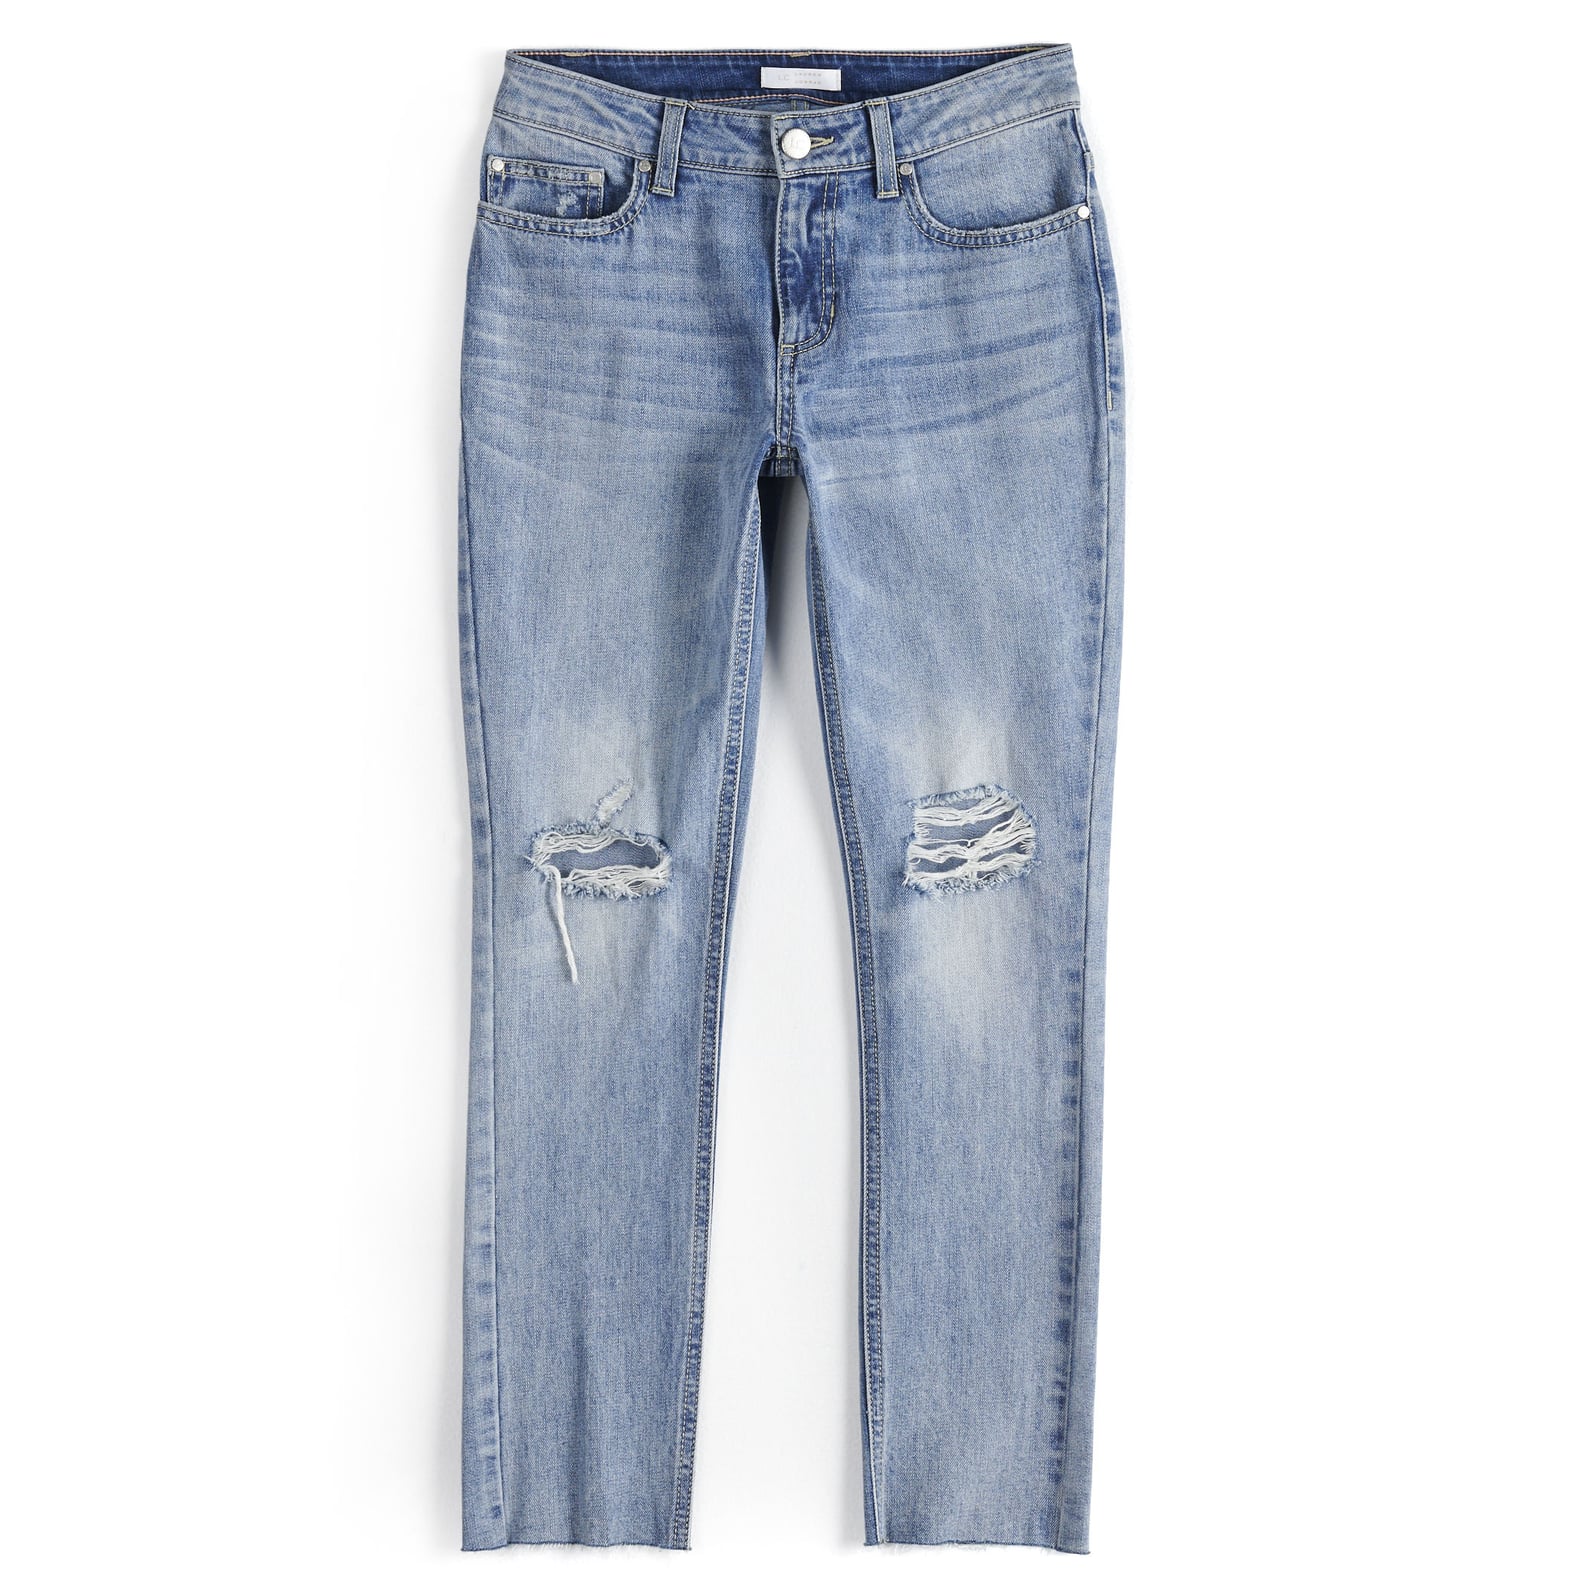 Lauren Conrad Skinny Jeans | POPSUGAR Fashion